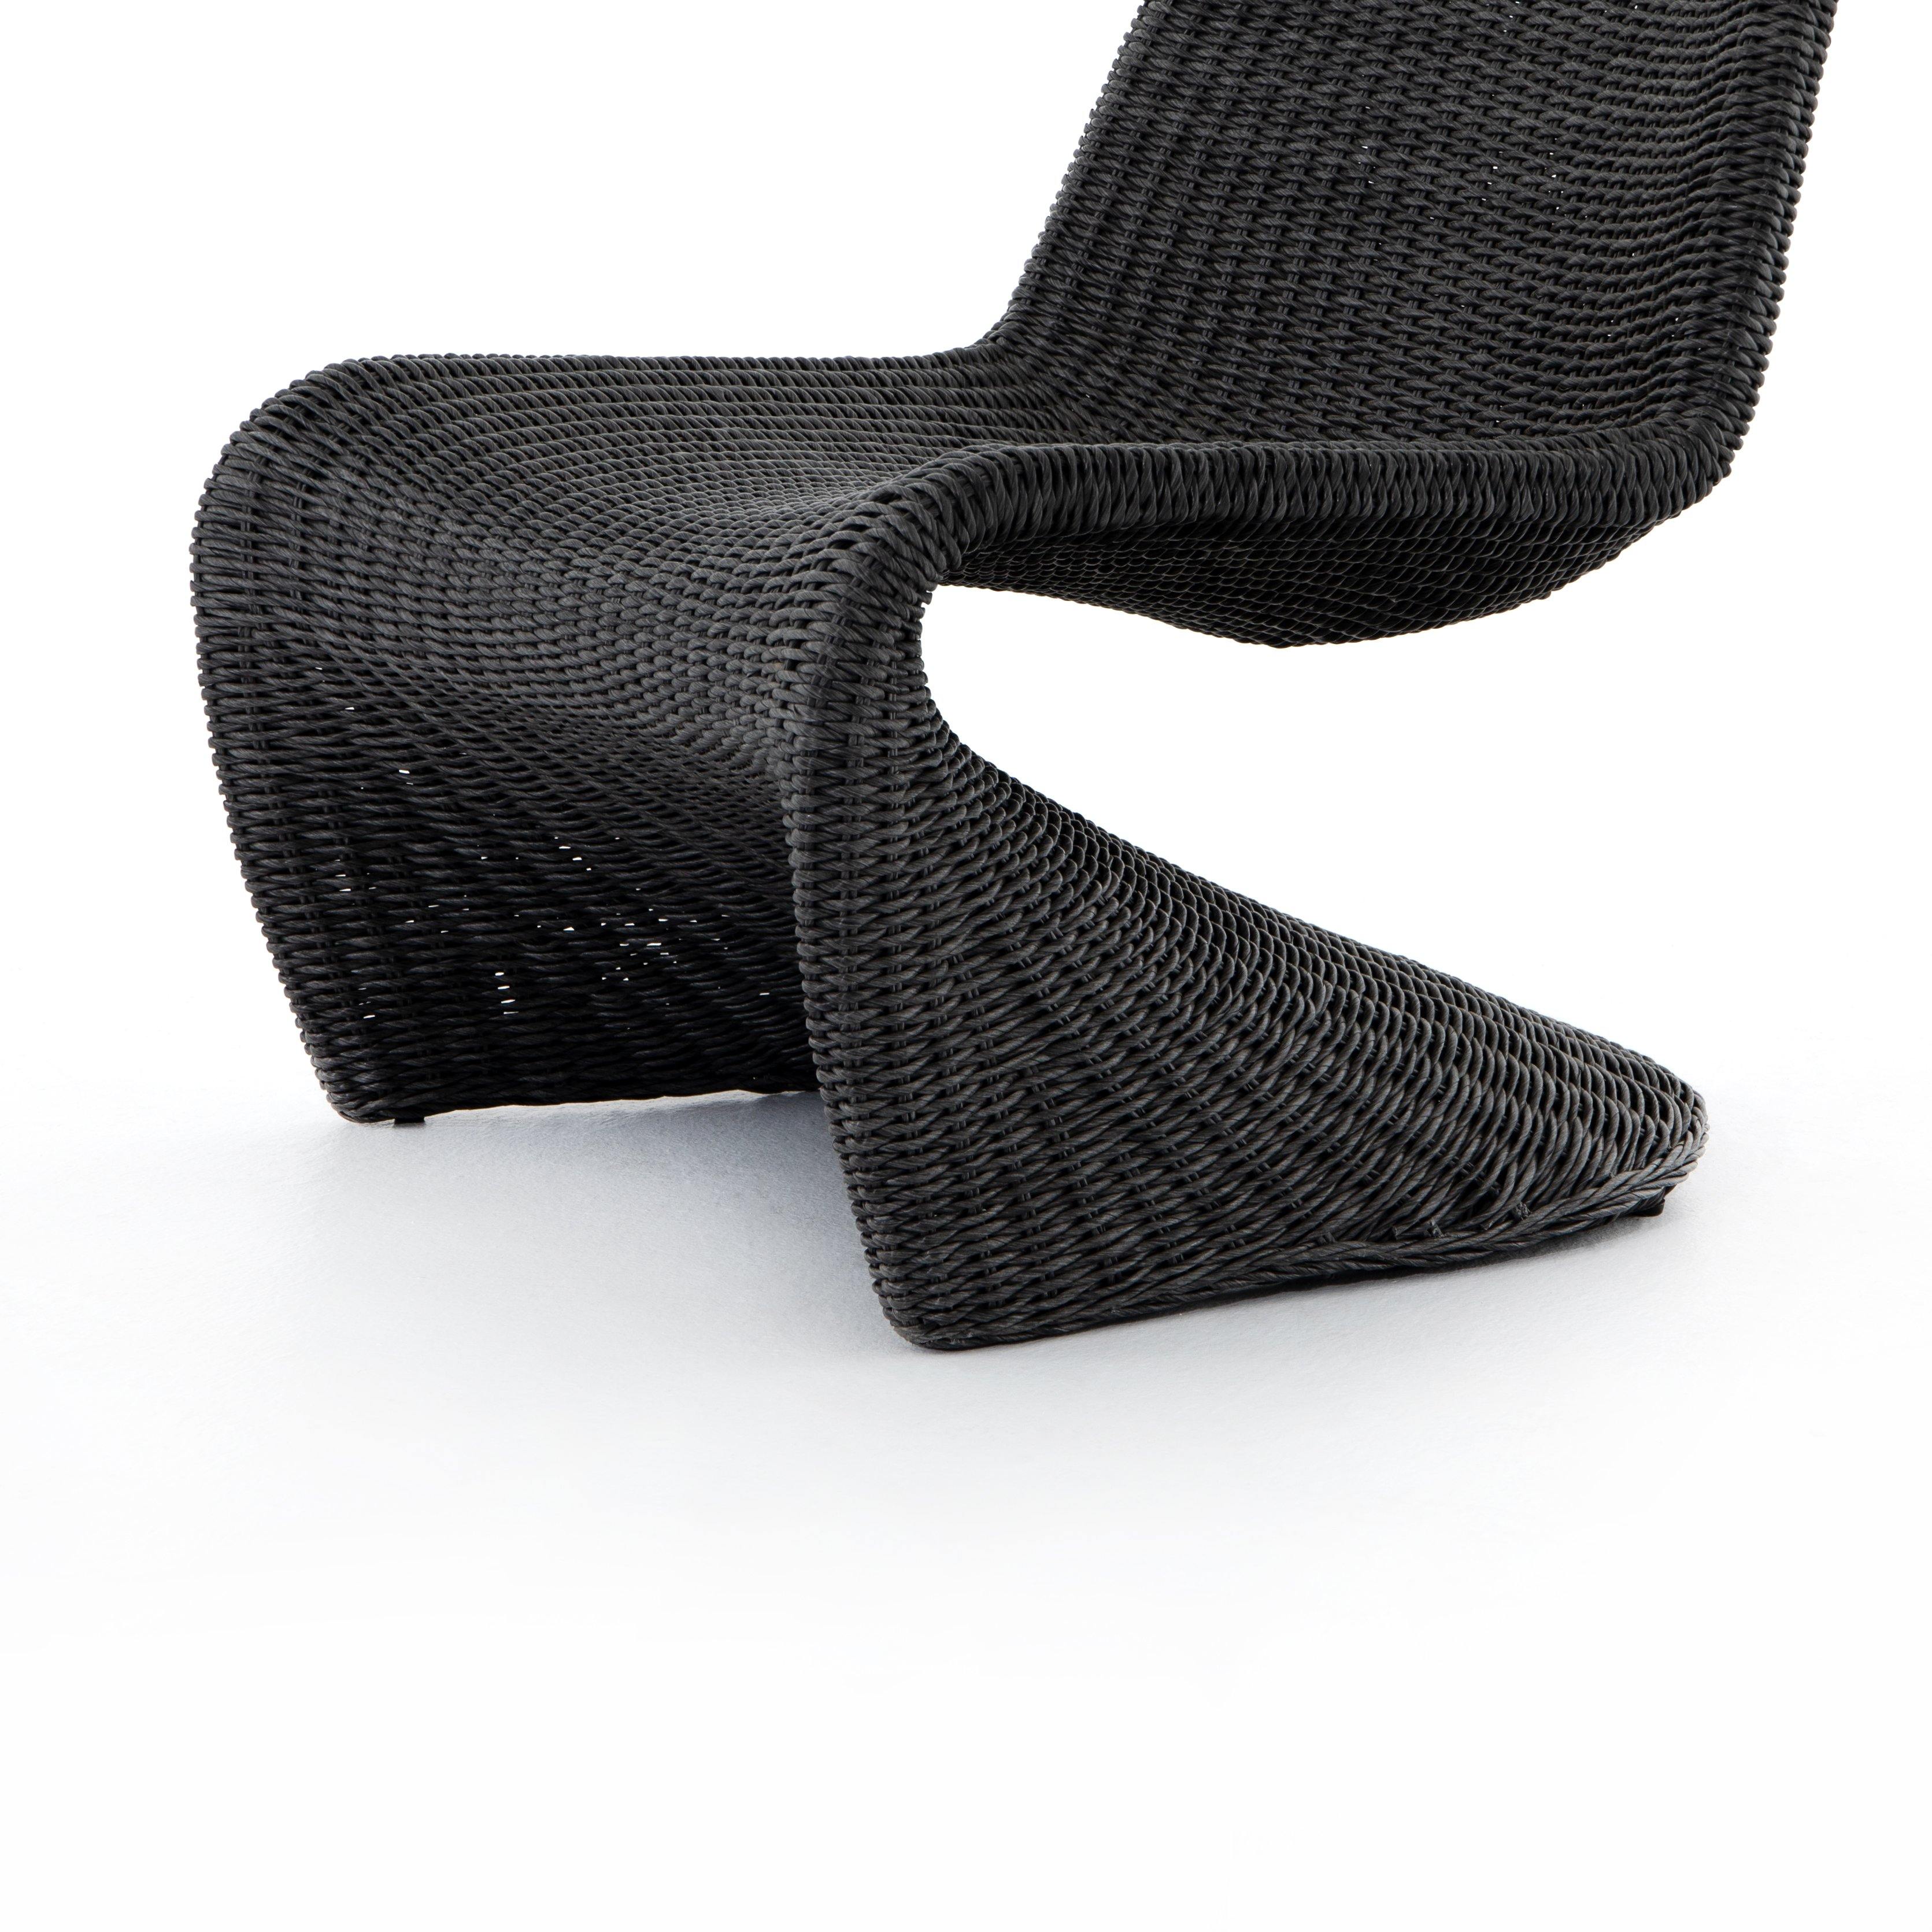 Portia Coal Outdoor Occasional Chair - Reimagine Designs - Outdoor, outdoor armchair, Outdoor Armchairs, outdoor chair